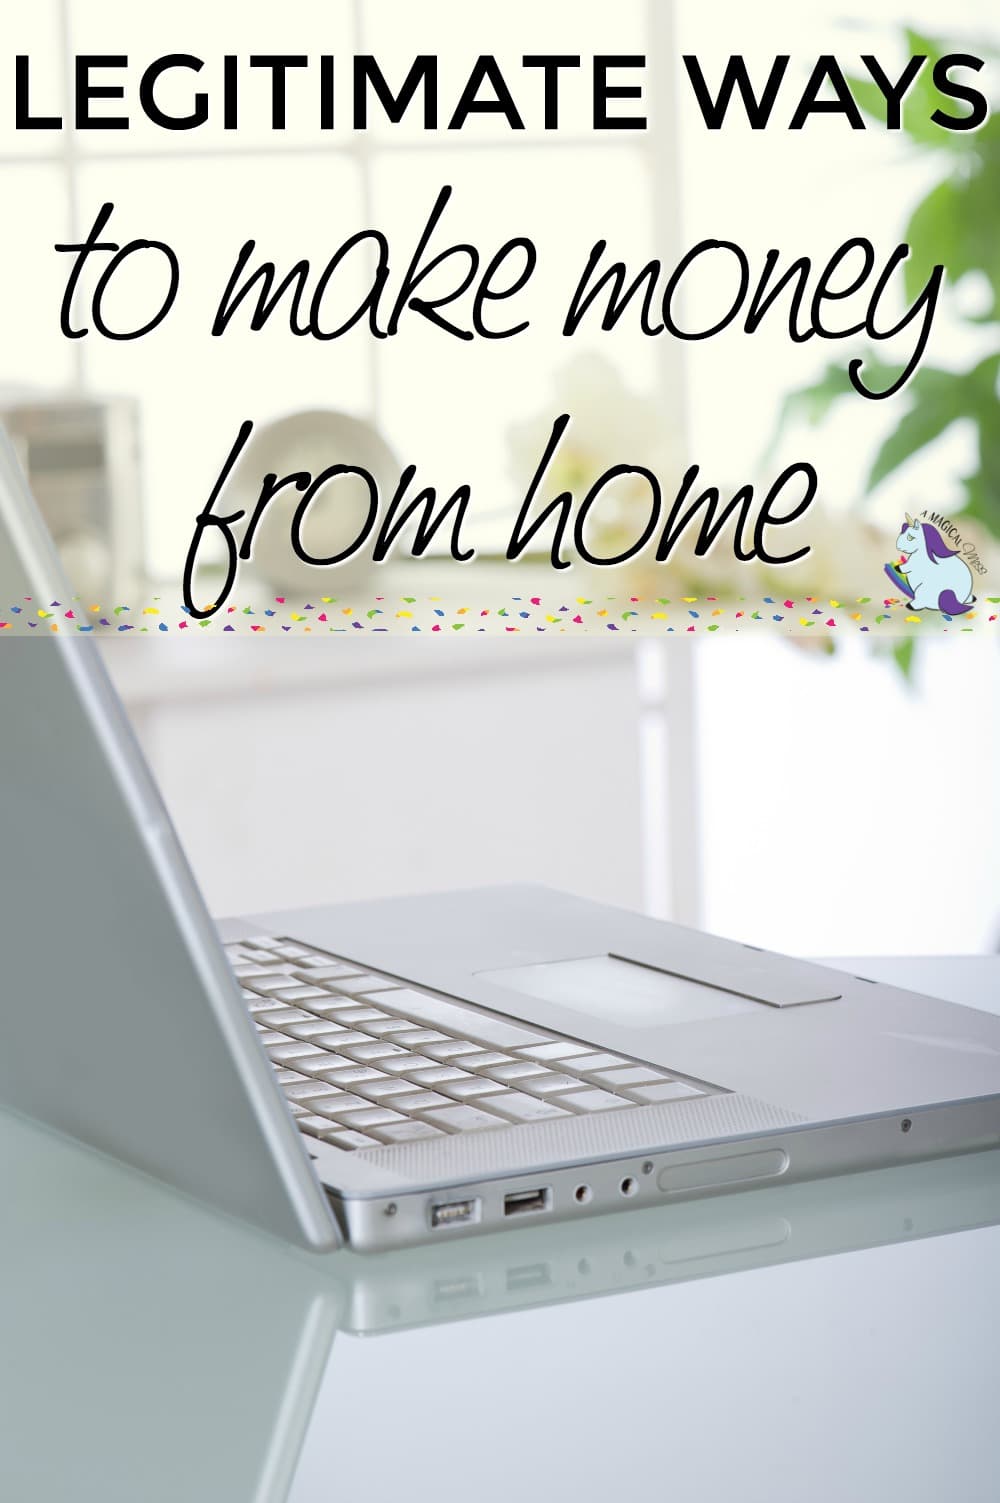 Legitimate Ways to Make Money from Home